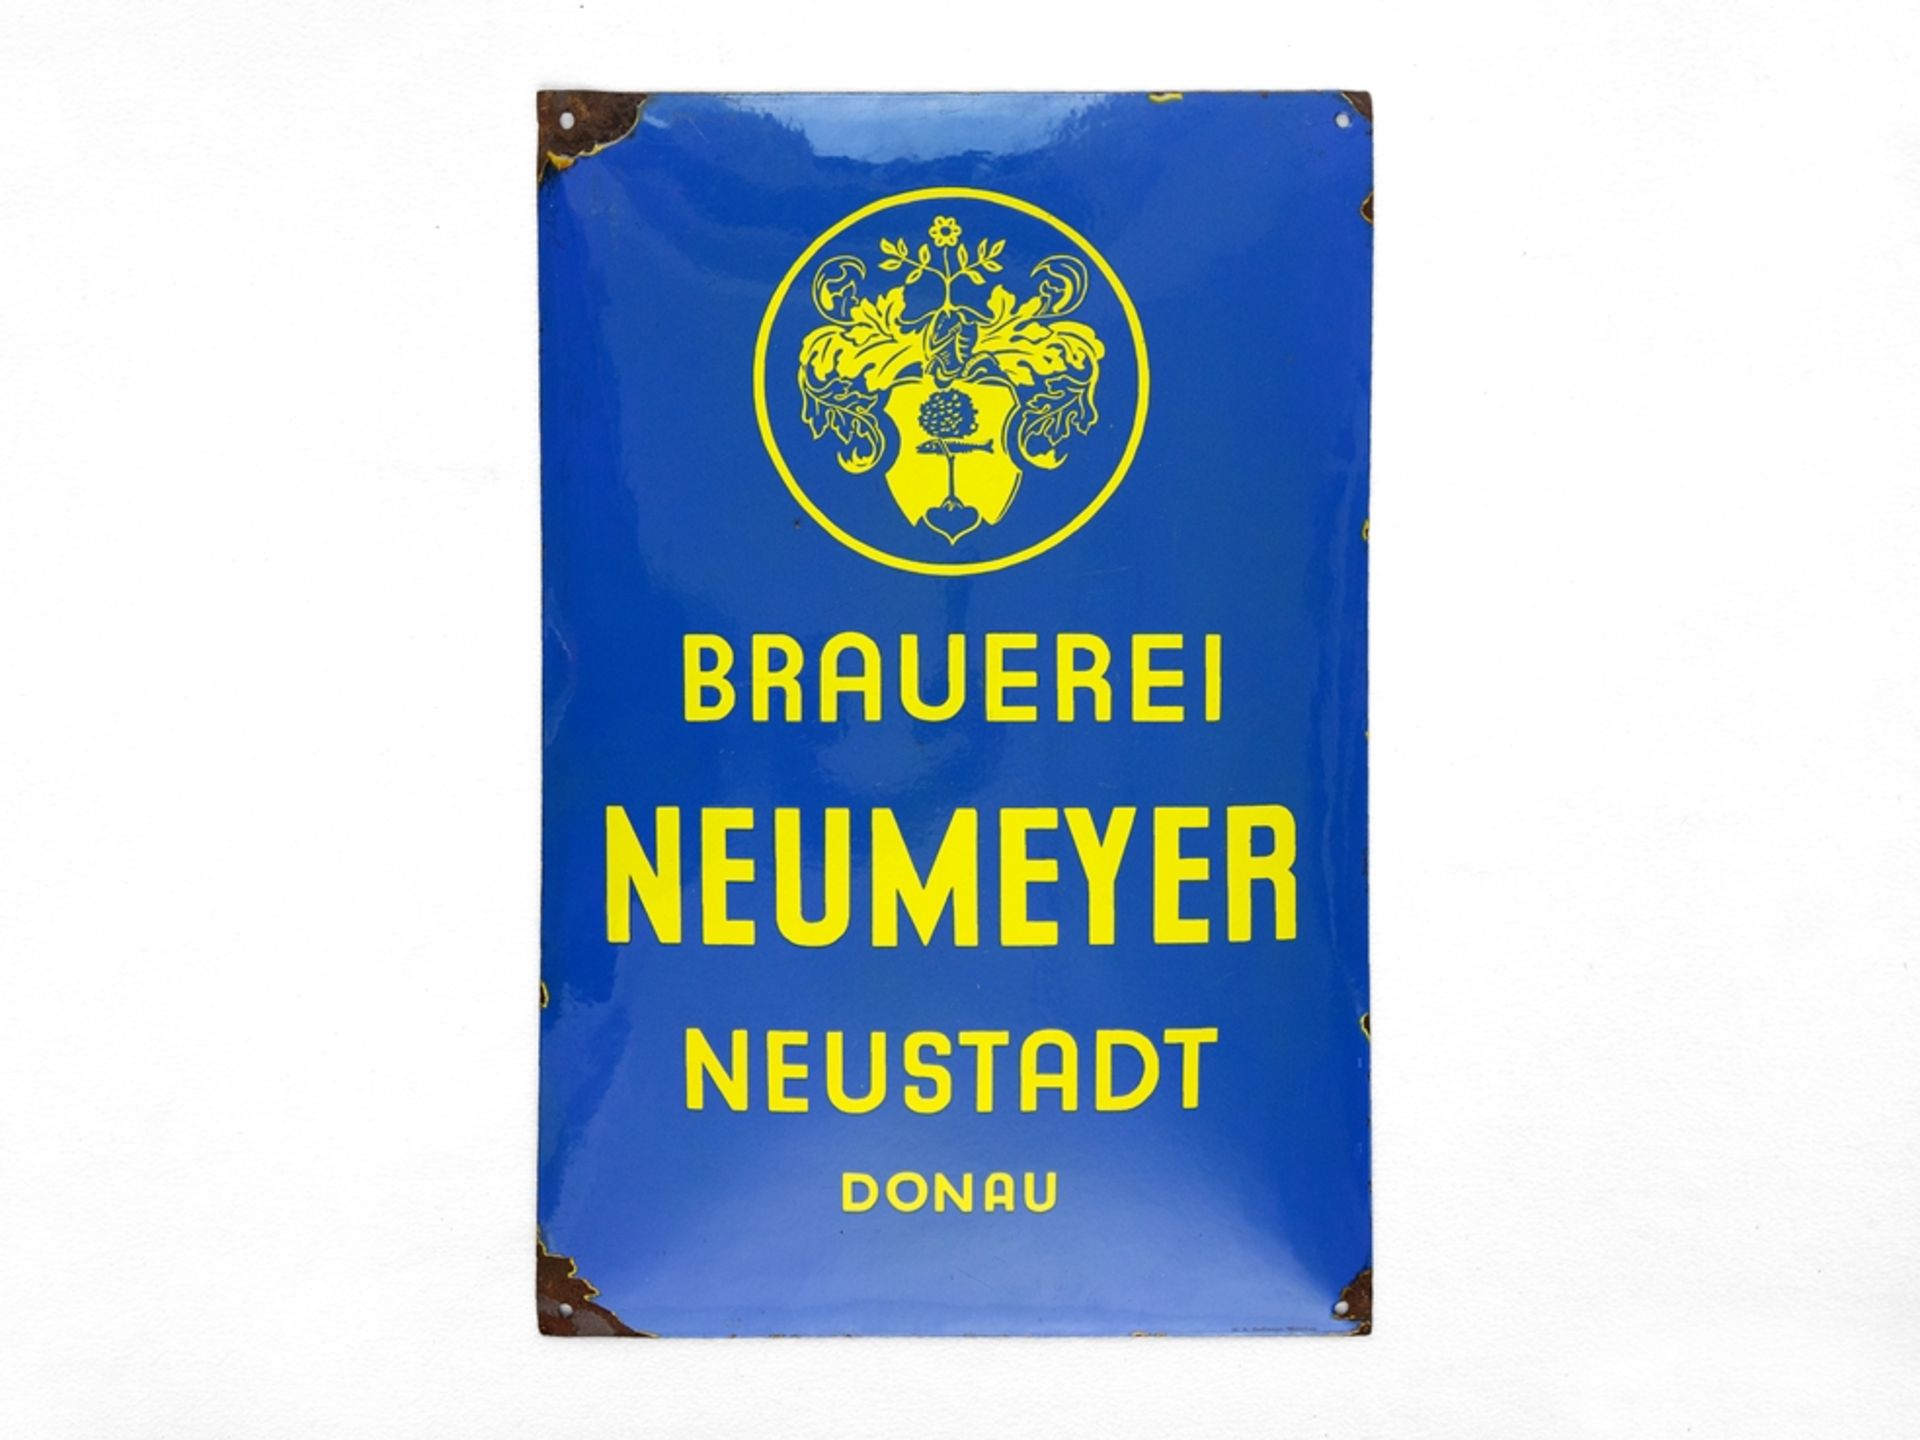 Enamel sign for the Neumeyer brewery, Neustadt Donau, around 1930 - Image 7 of 7